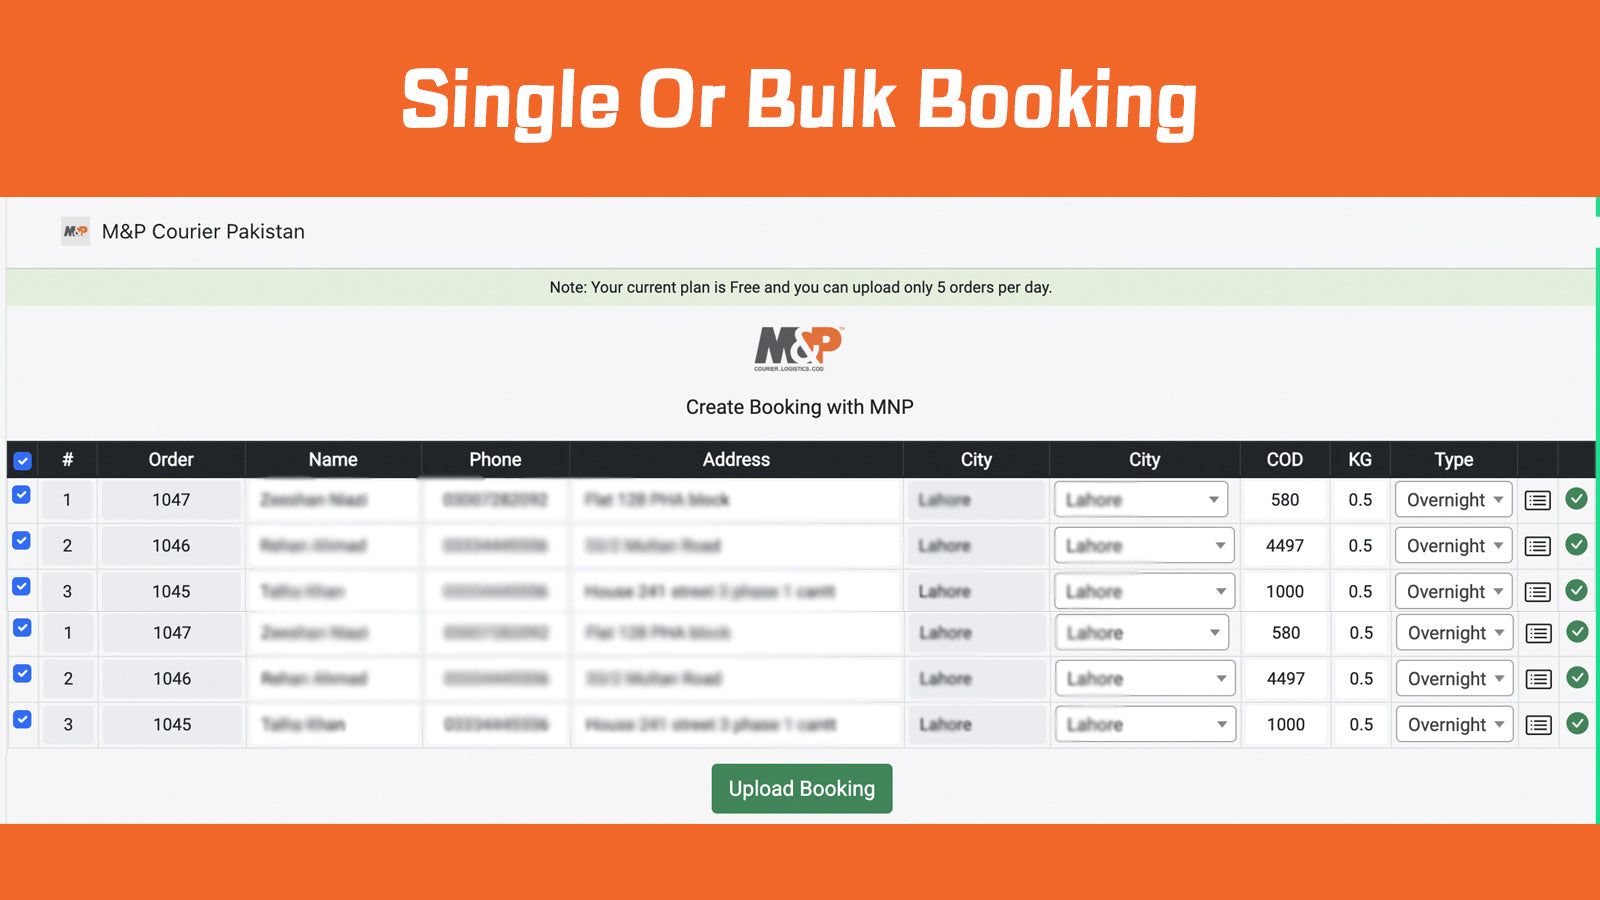 Single or Bulk Booking